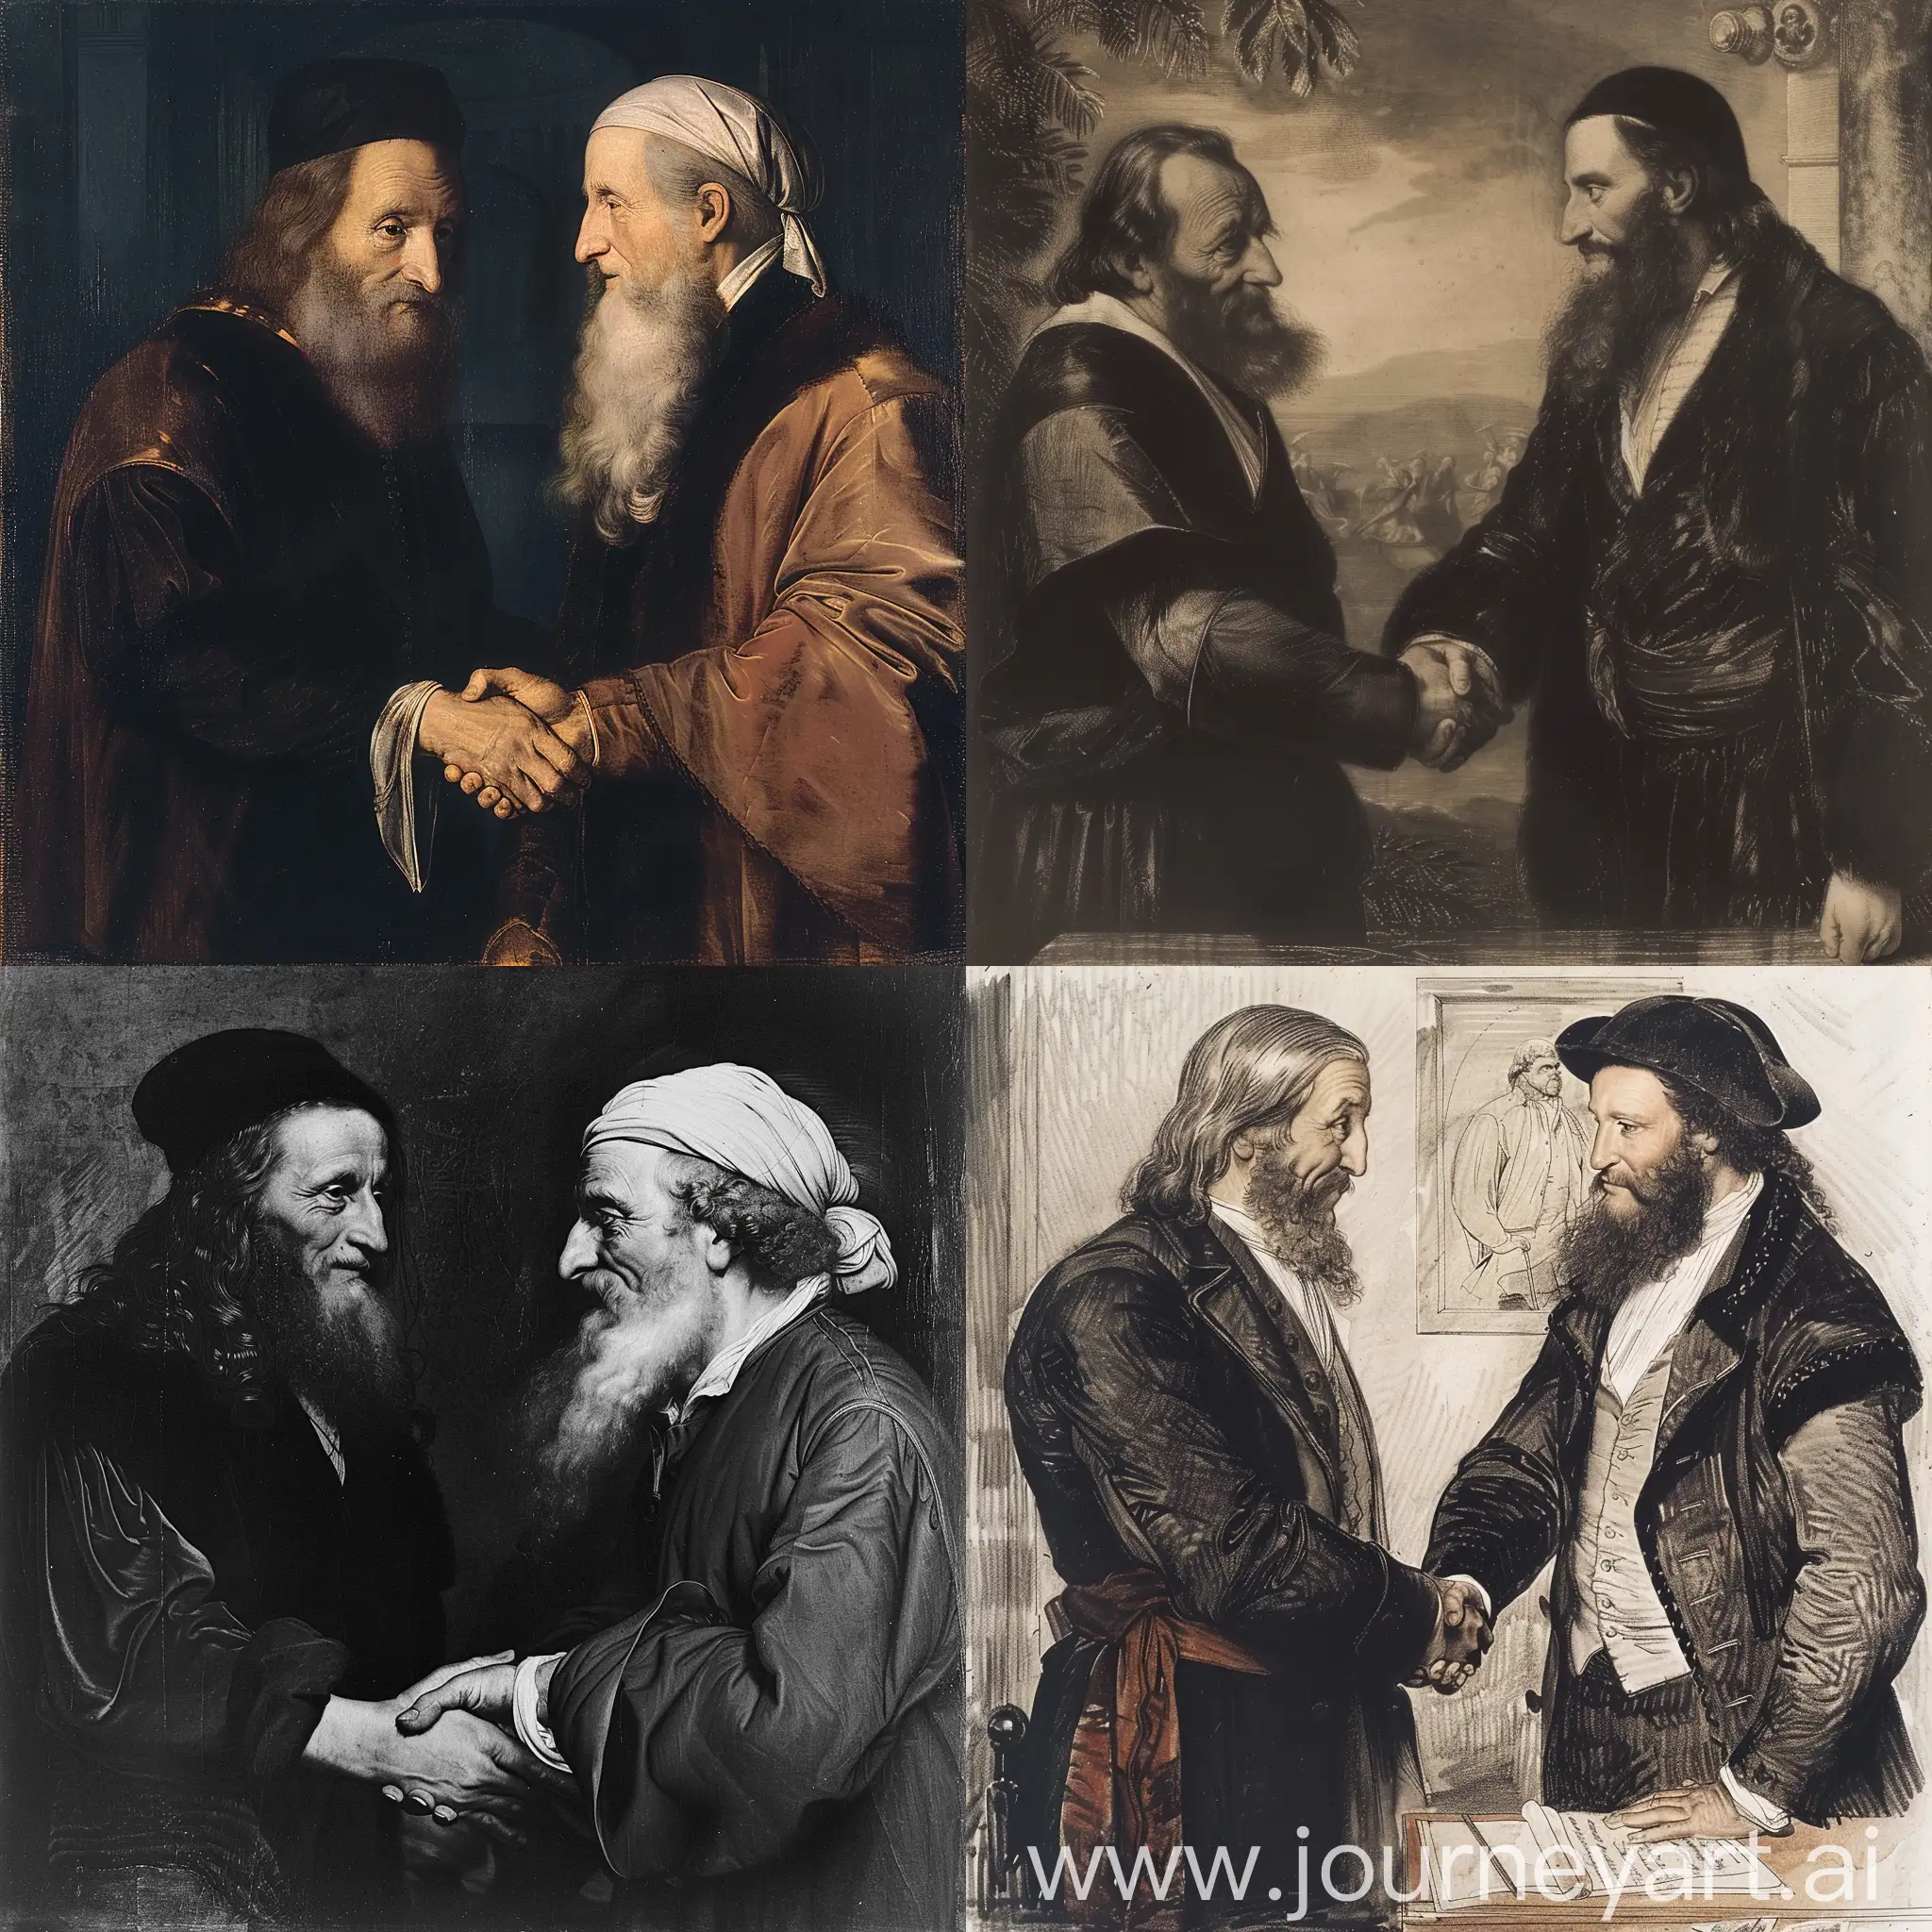 Leonardo da Vinci and Johann Goethe shakes hands.
Ultra-realistic.